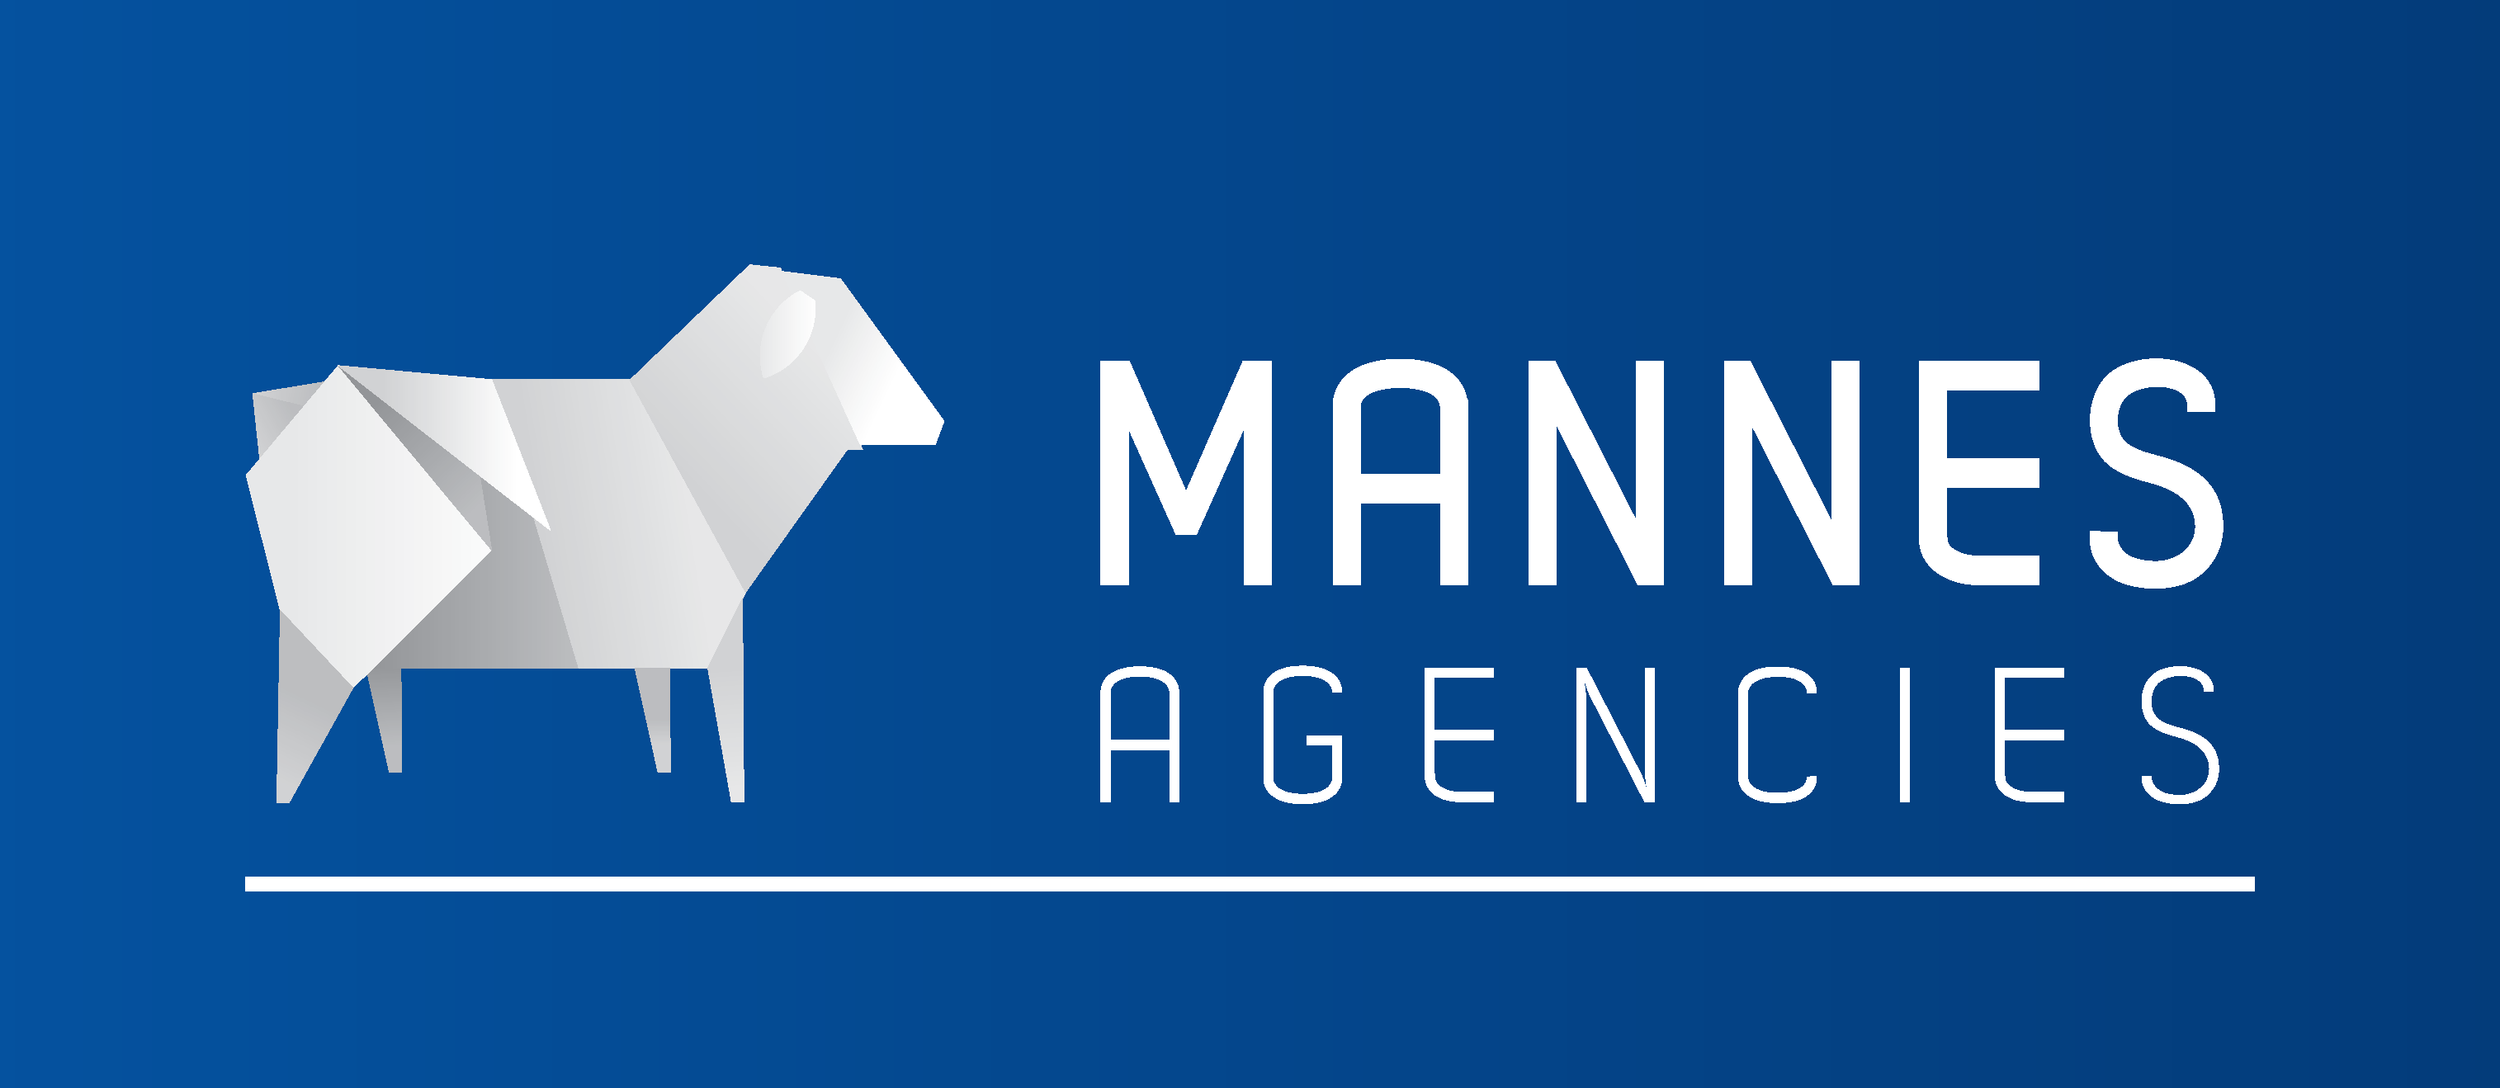 Mannes Logo horizontal.png